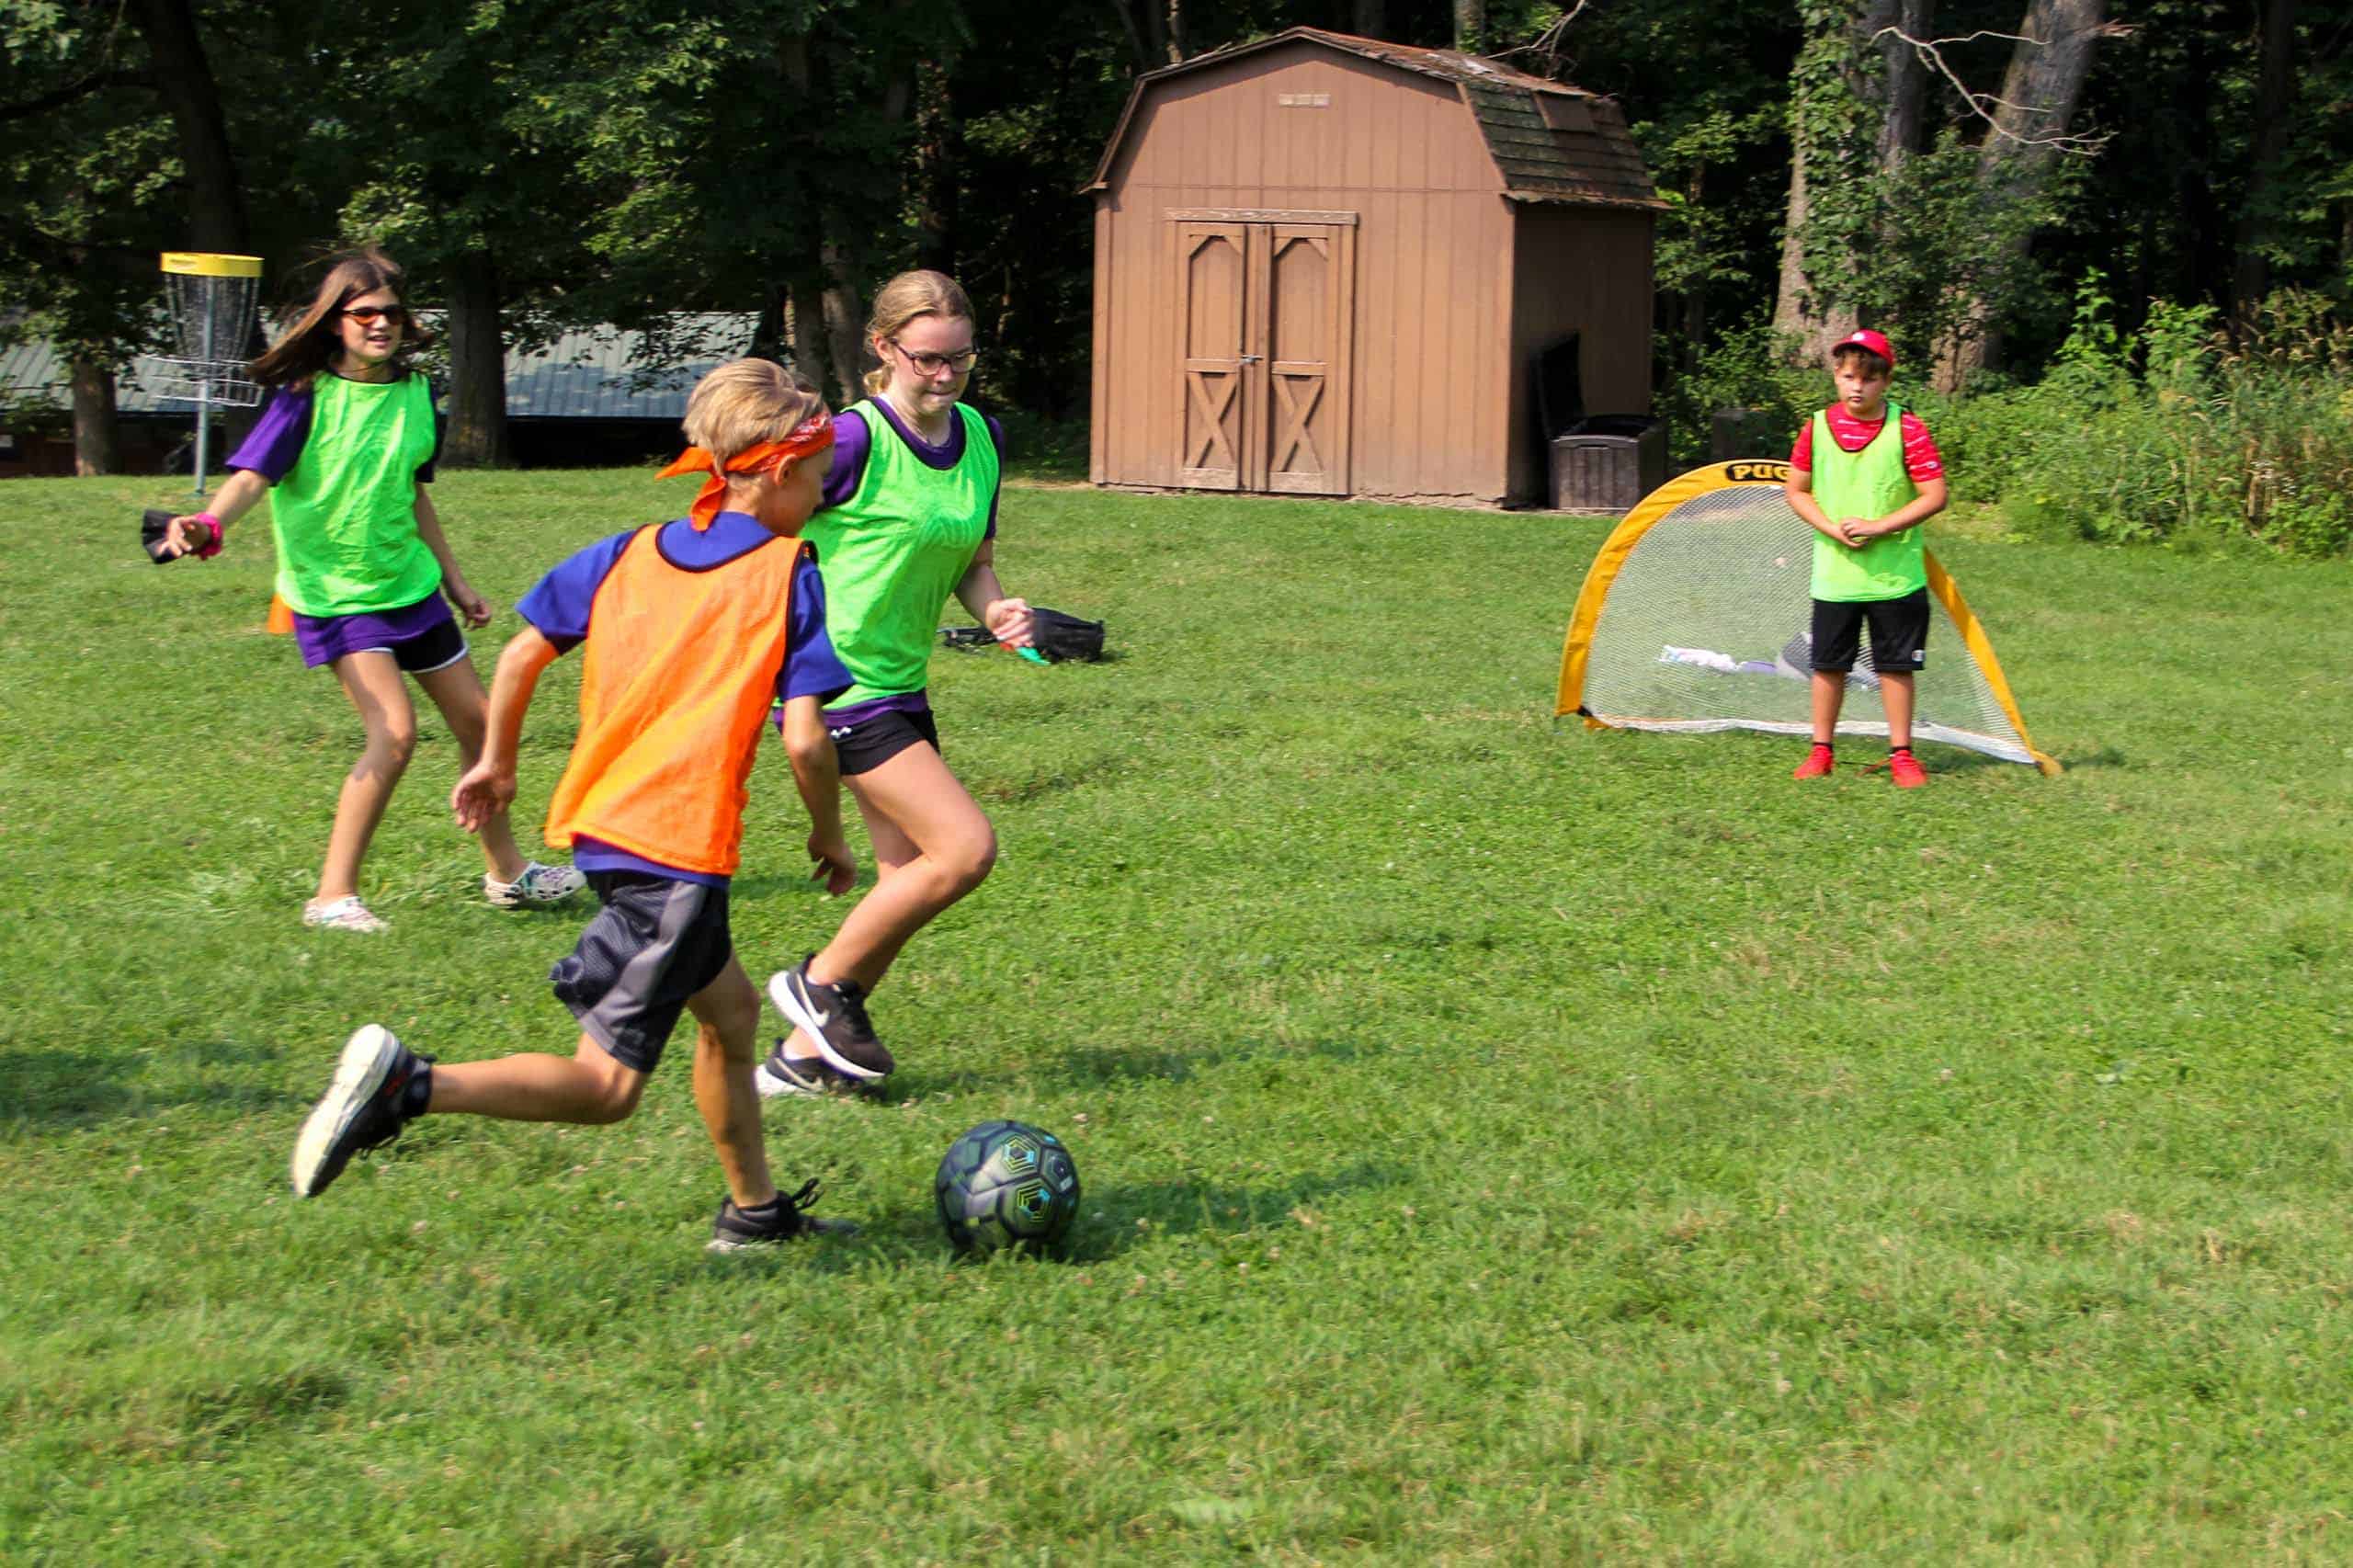 A group of kids kicking a soccer ball.